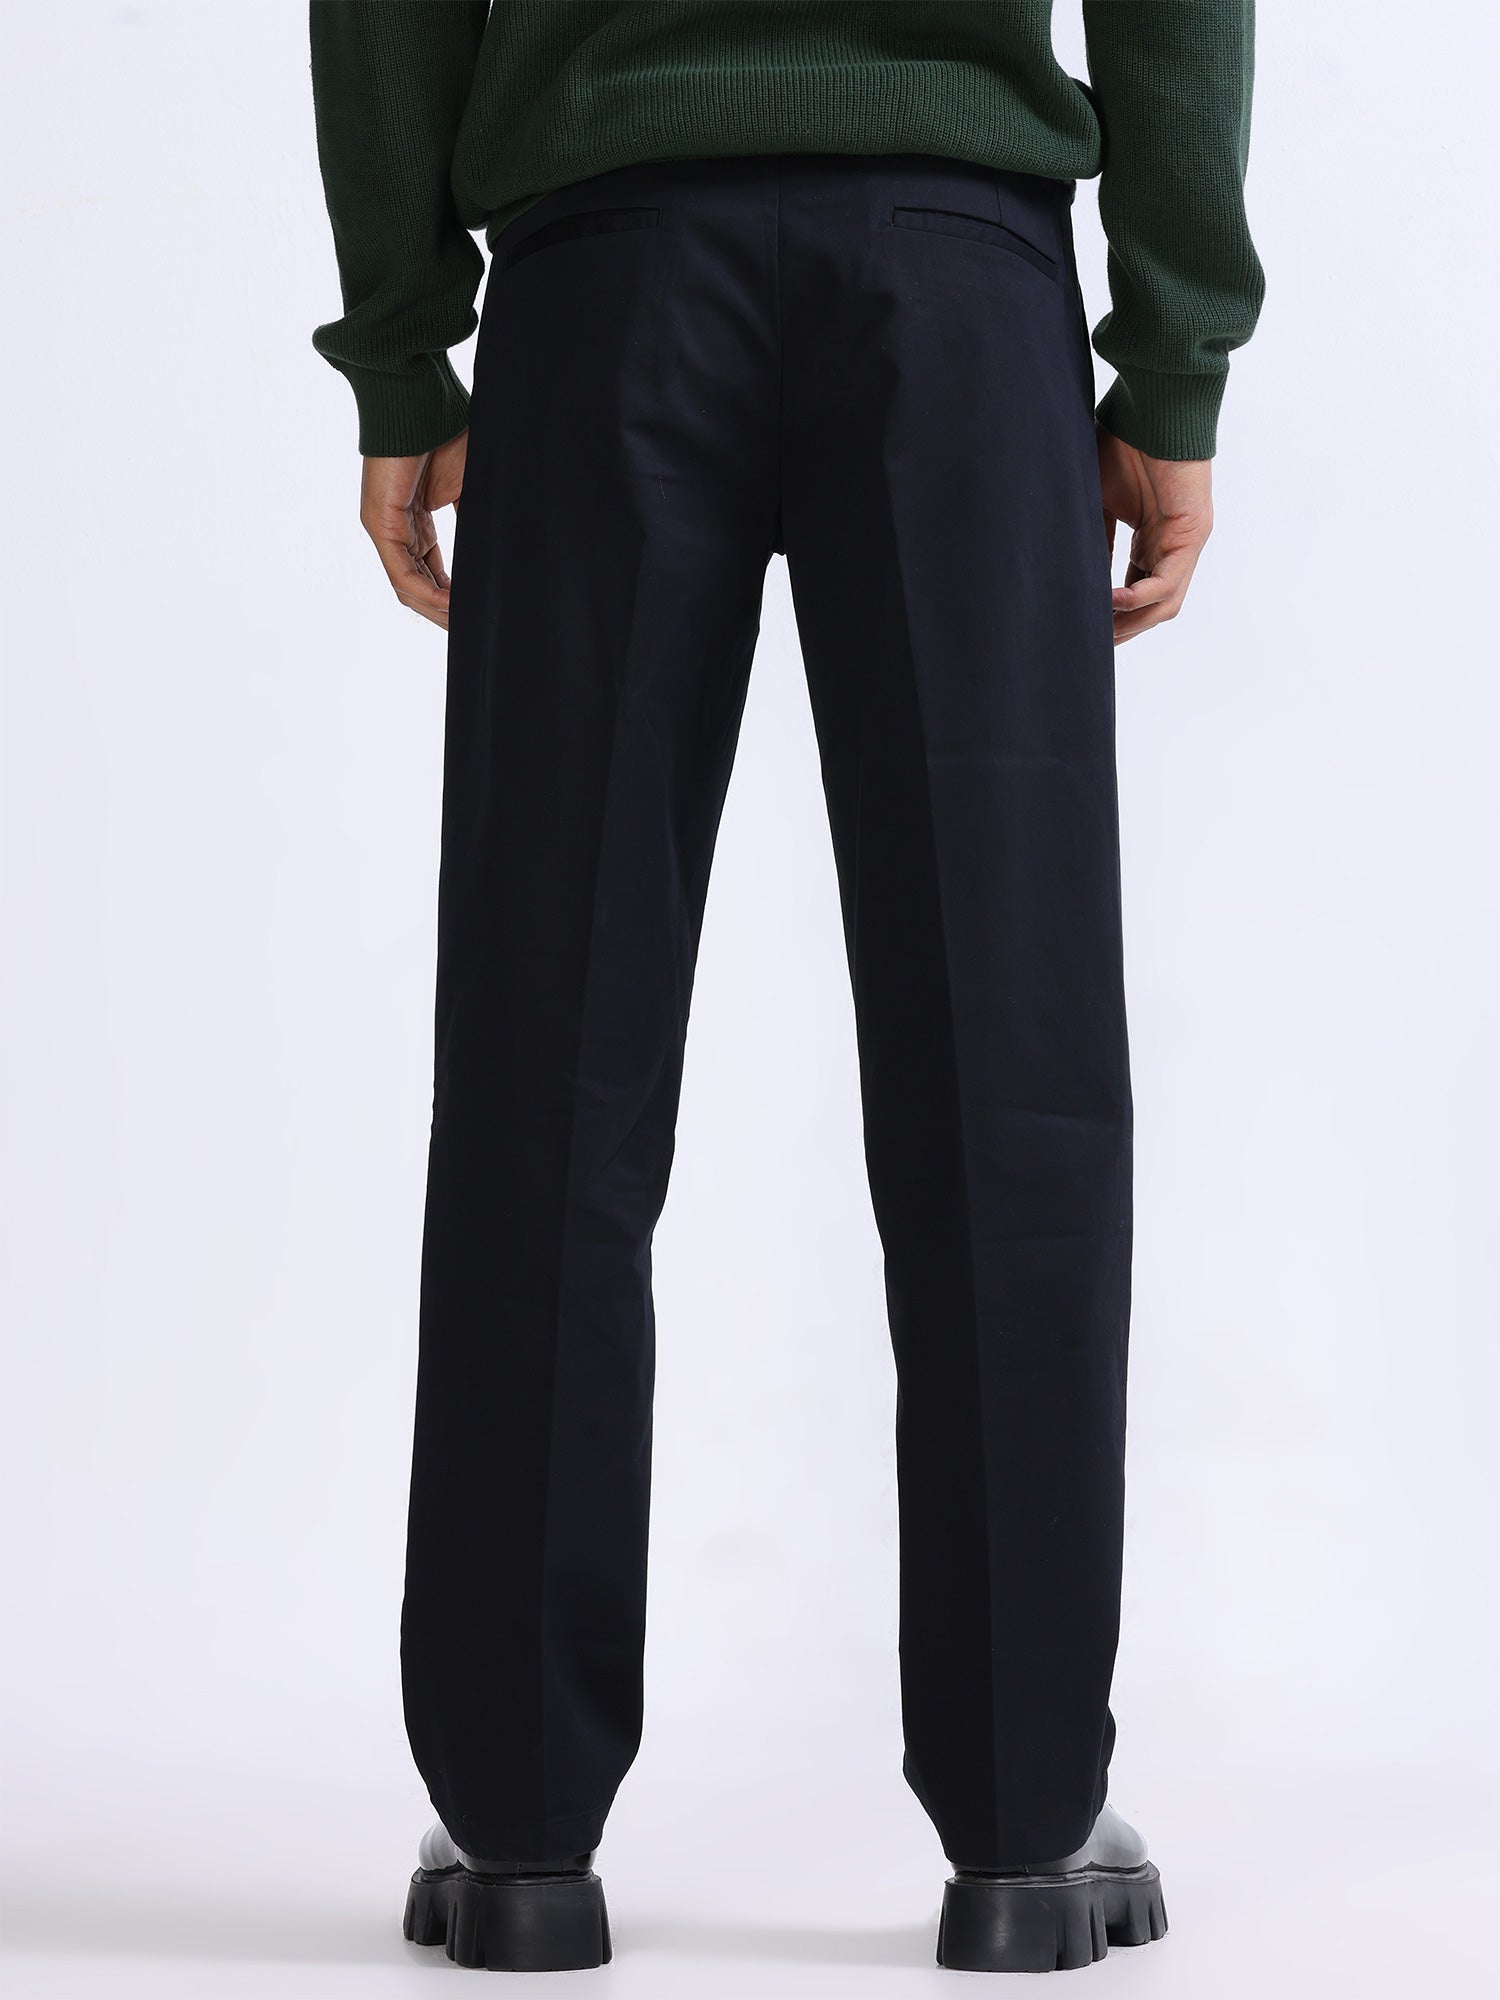 Men's Trousers Online | Buy Italian Clothing at derna.it